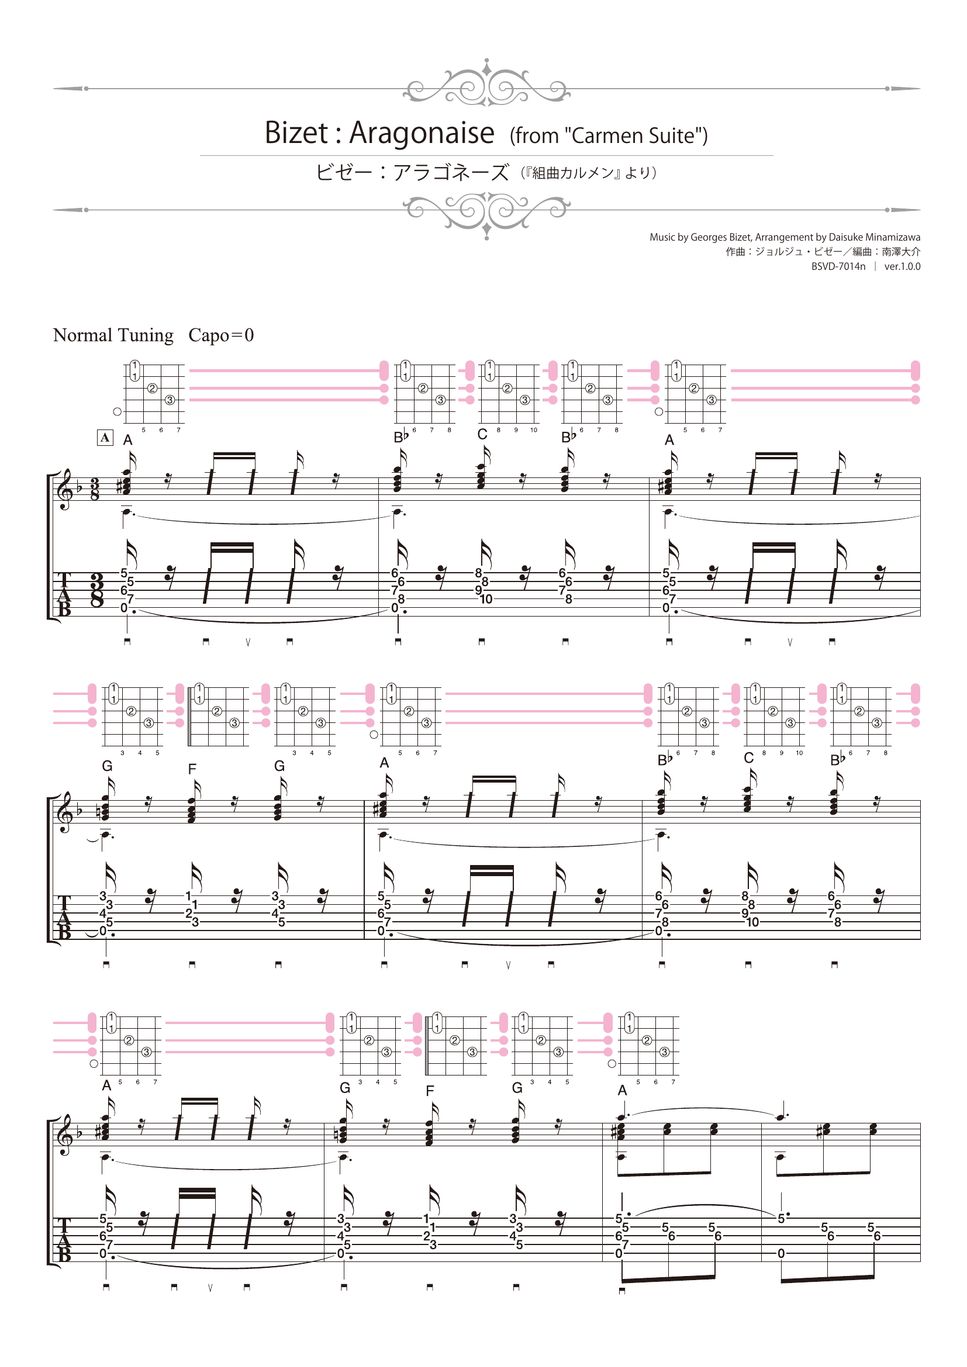 Bizet - Aragonaise (from "Carmen Suite") (Solo Guitar) by Daisuke Minamizawa